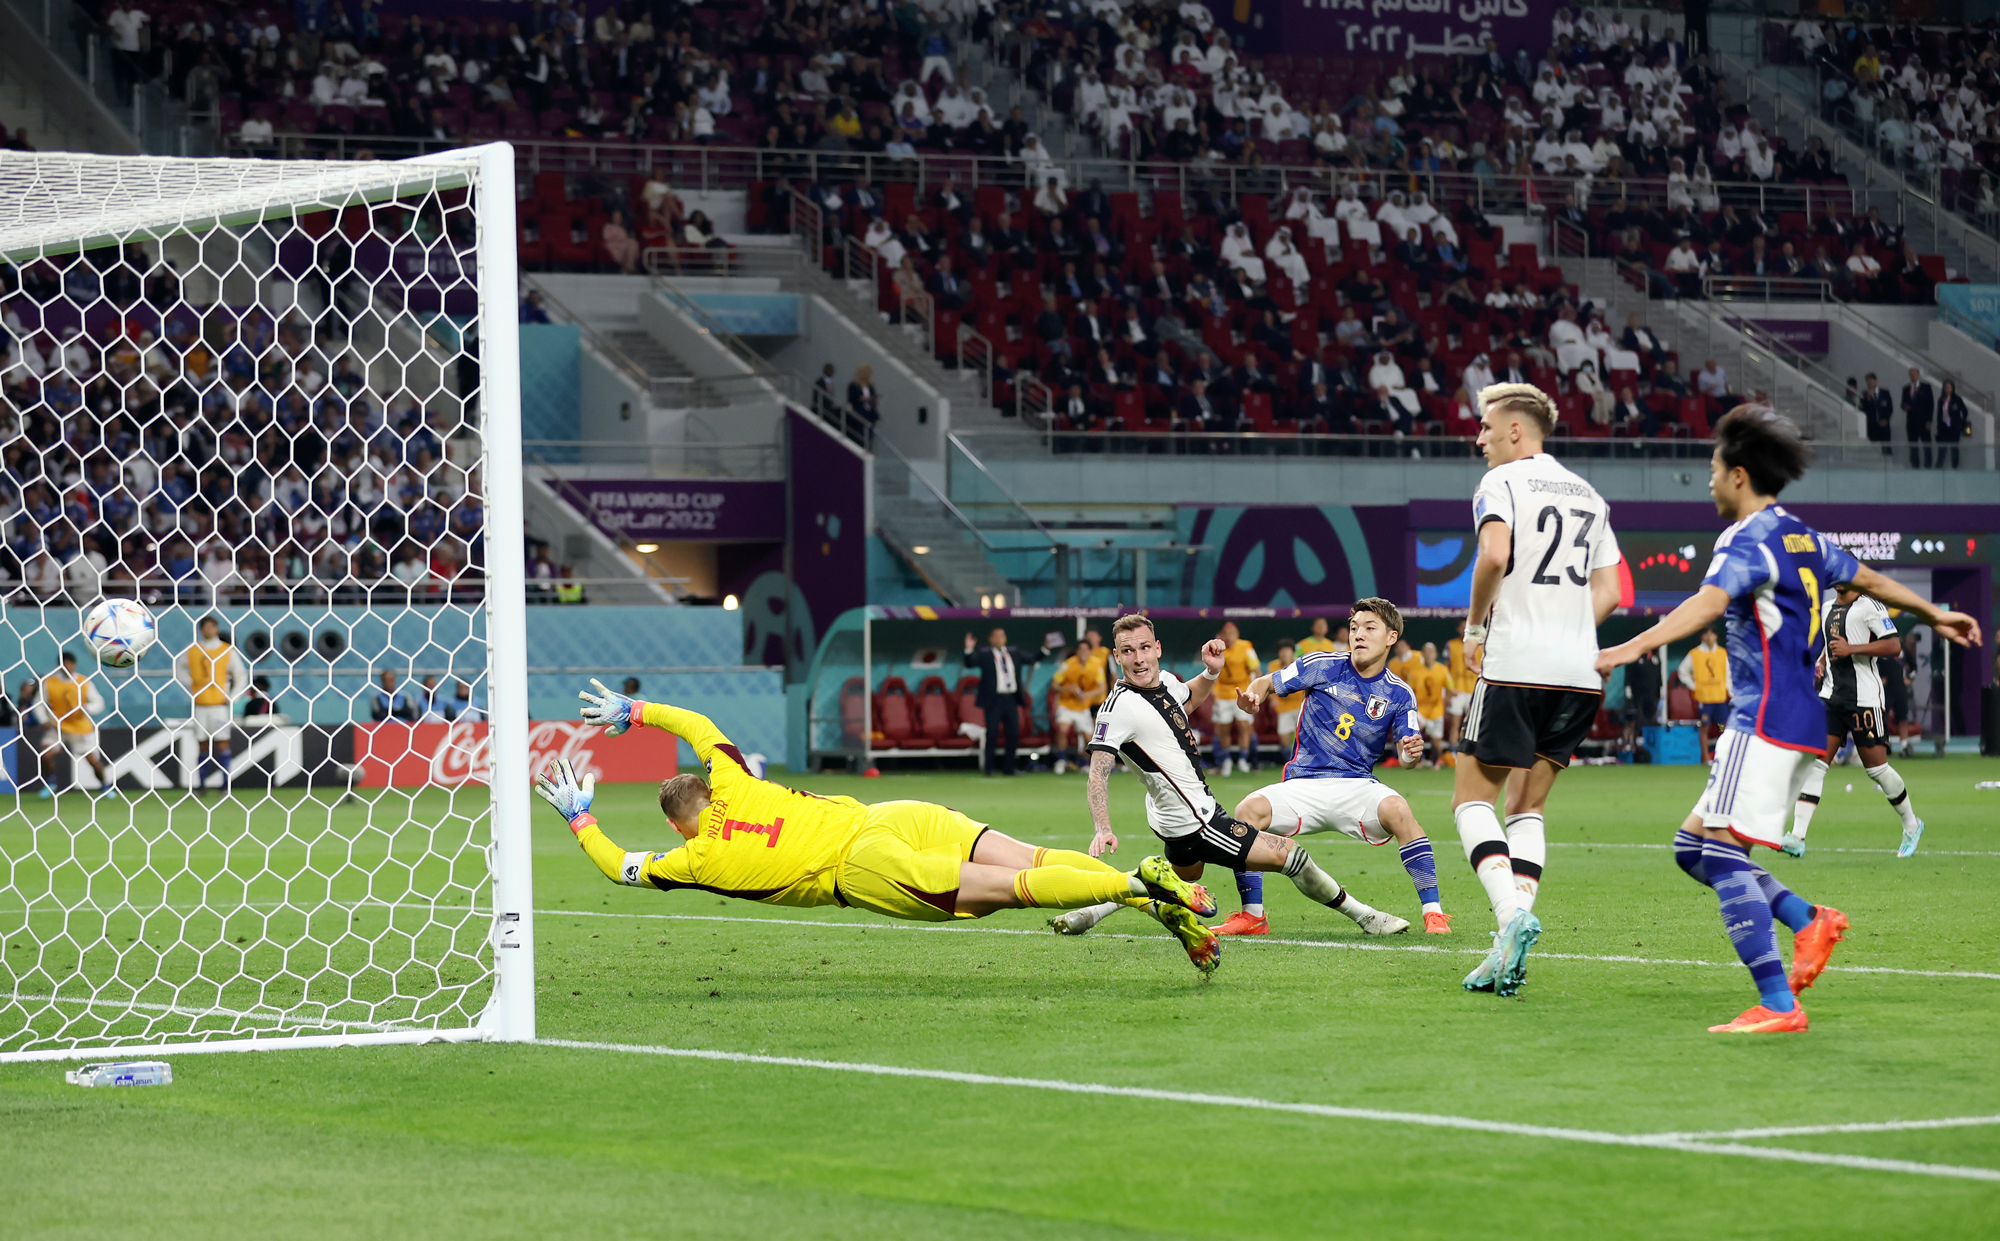 Ritsu Dōan of Japan scores their team's first goal against Germany at Khalifa International Stadium in Doha, Qatar on Wednesday.